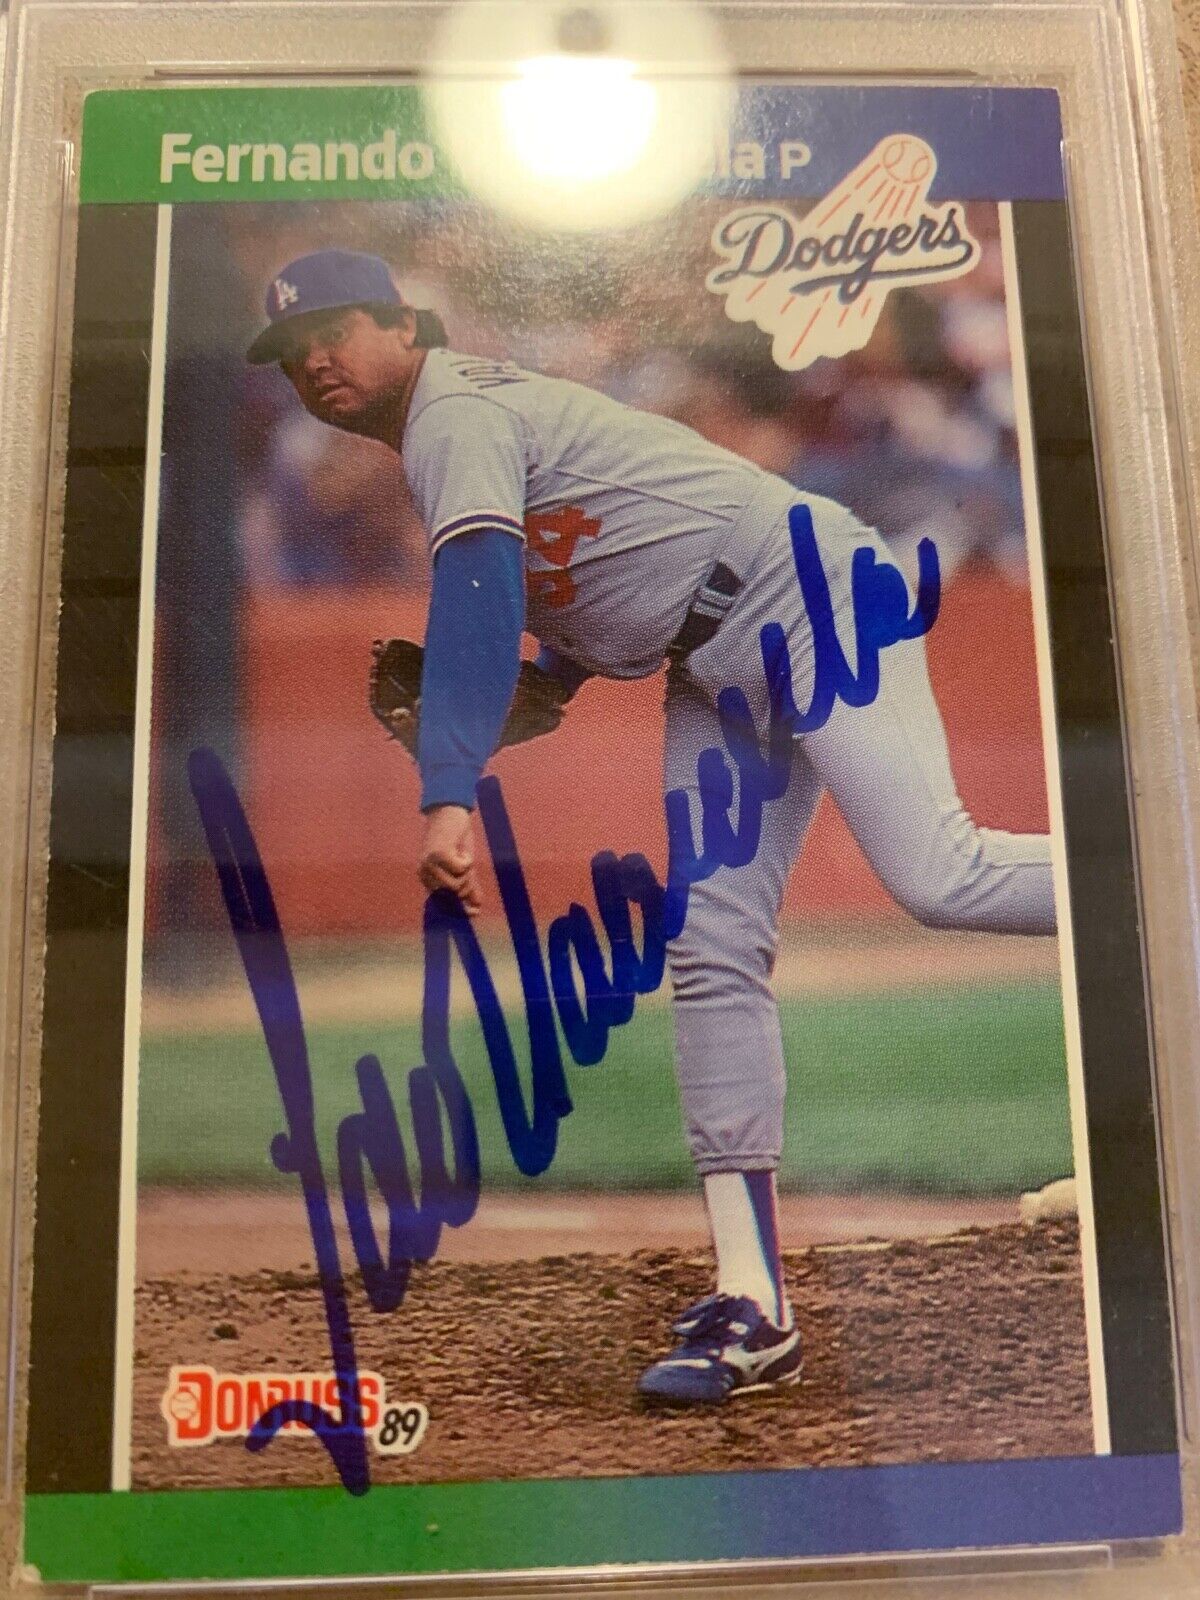 Dodgers Fernando Valenzuela Autographed Jersey for Sale in